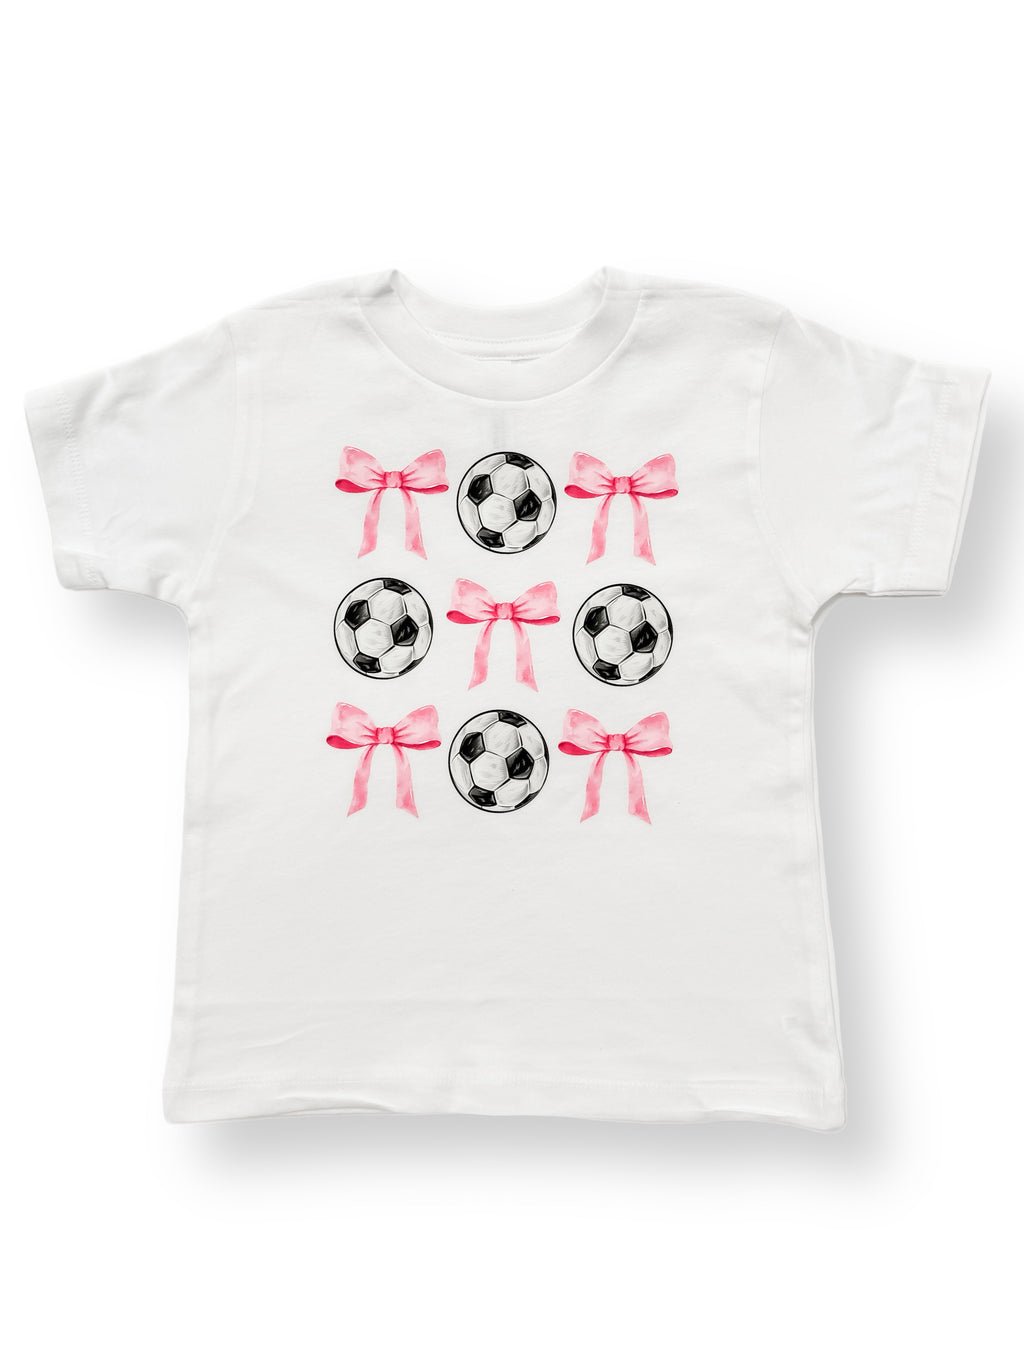 Soccer & Bows Tee